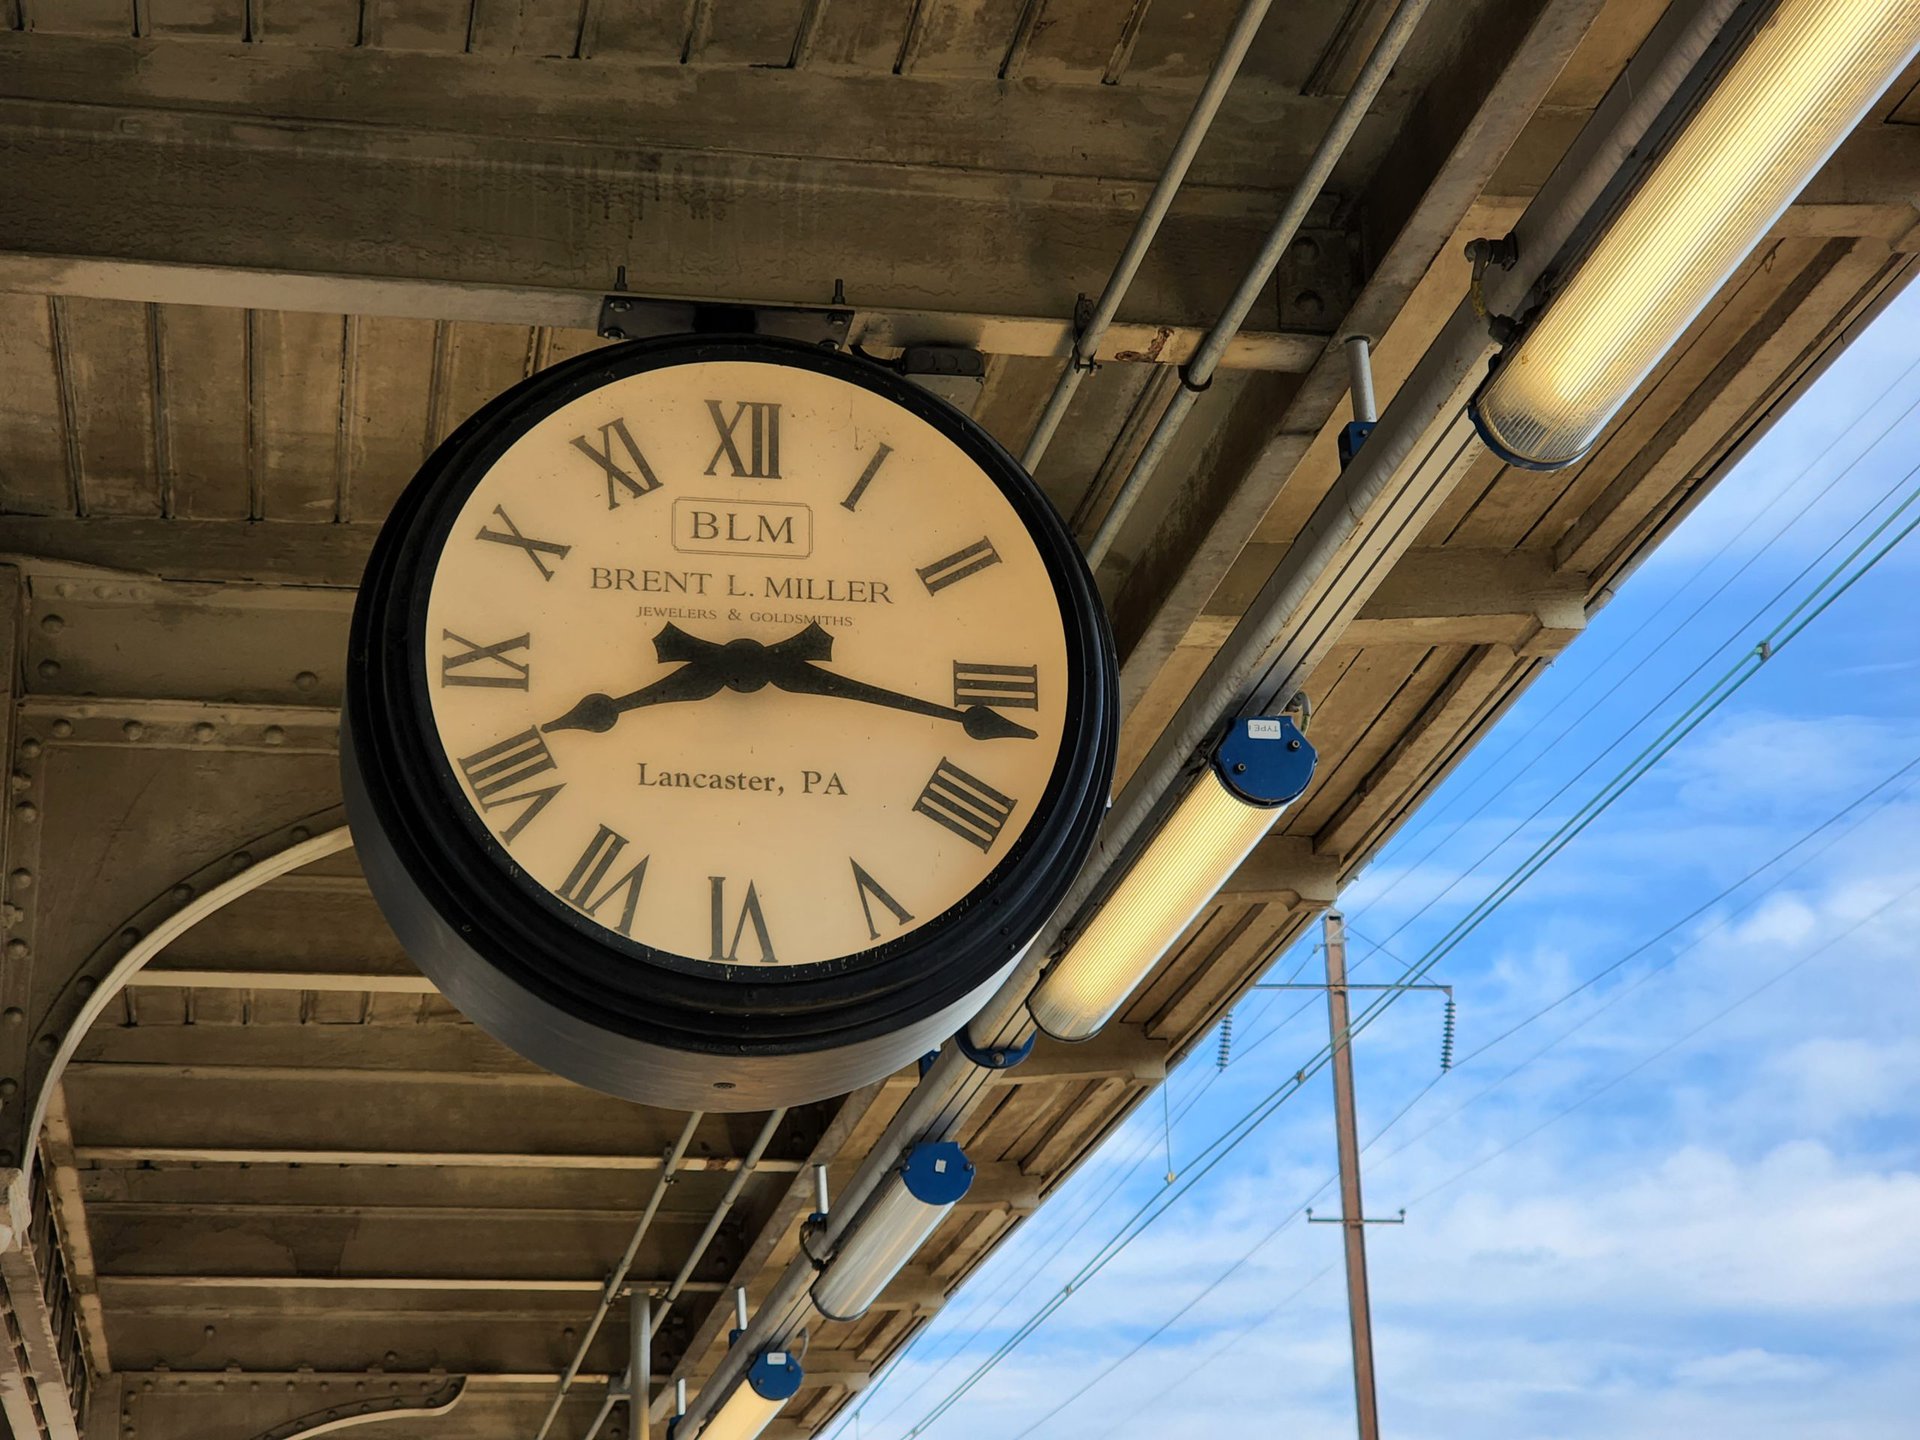 Samsung Galaxy S22 Ultra train station clock